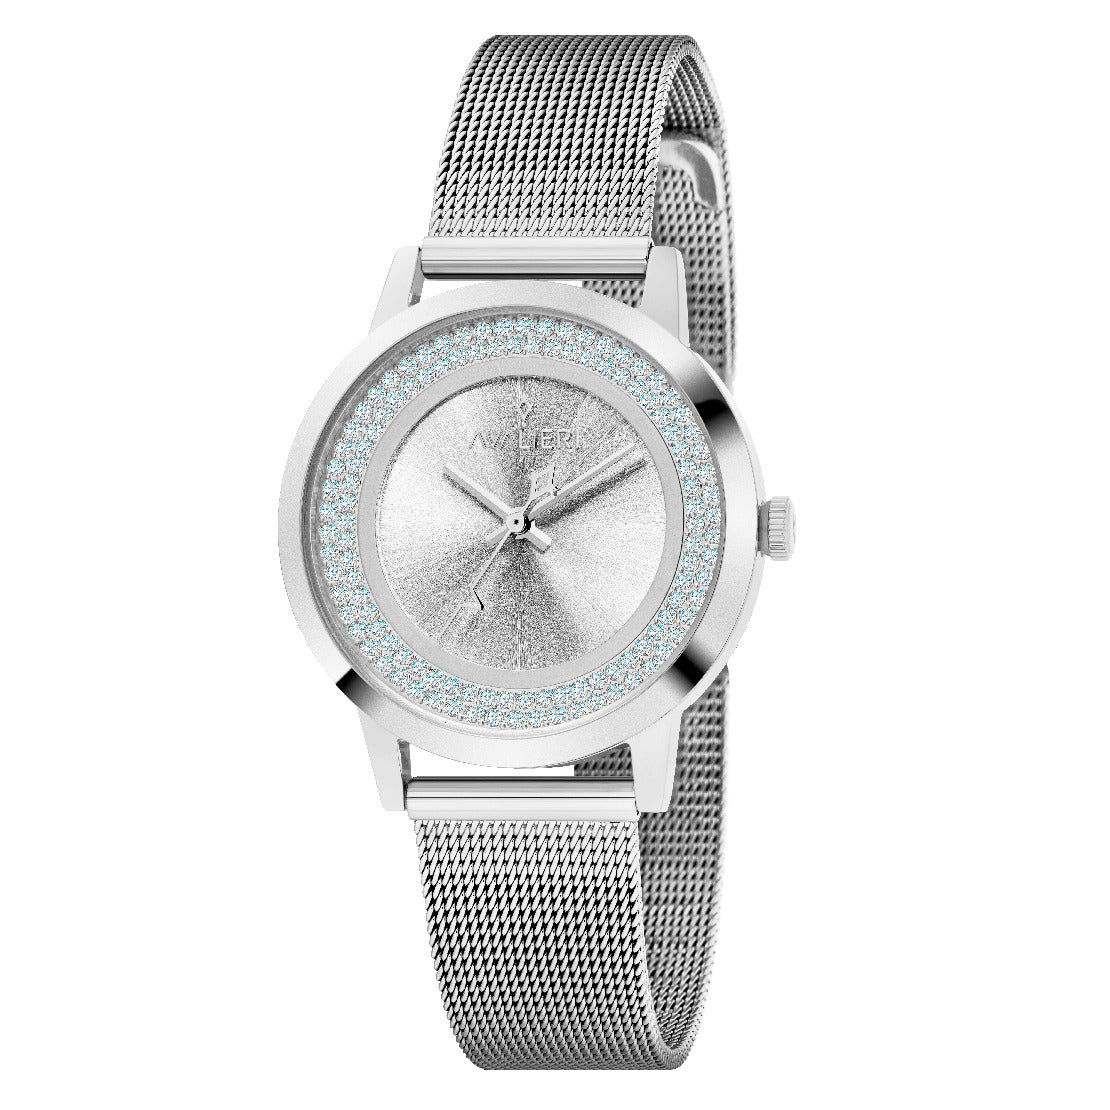 Avalieri Women's Quartz Watch With Silver White Dial - AV-2544B